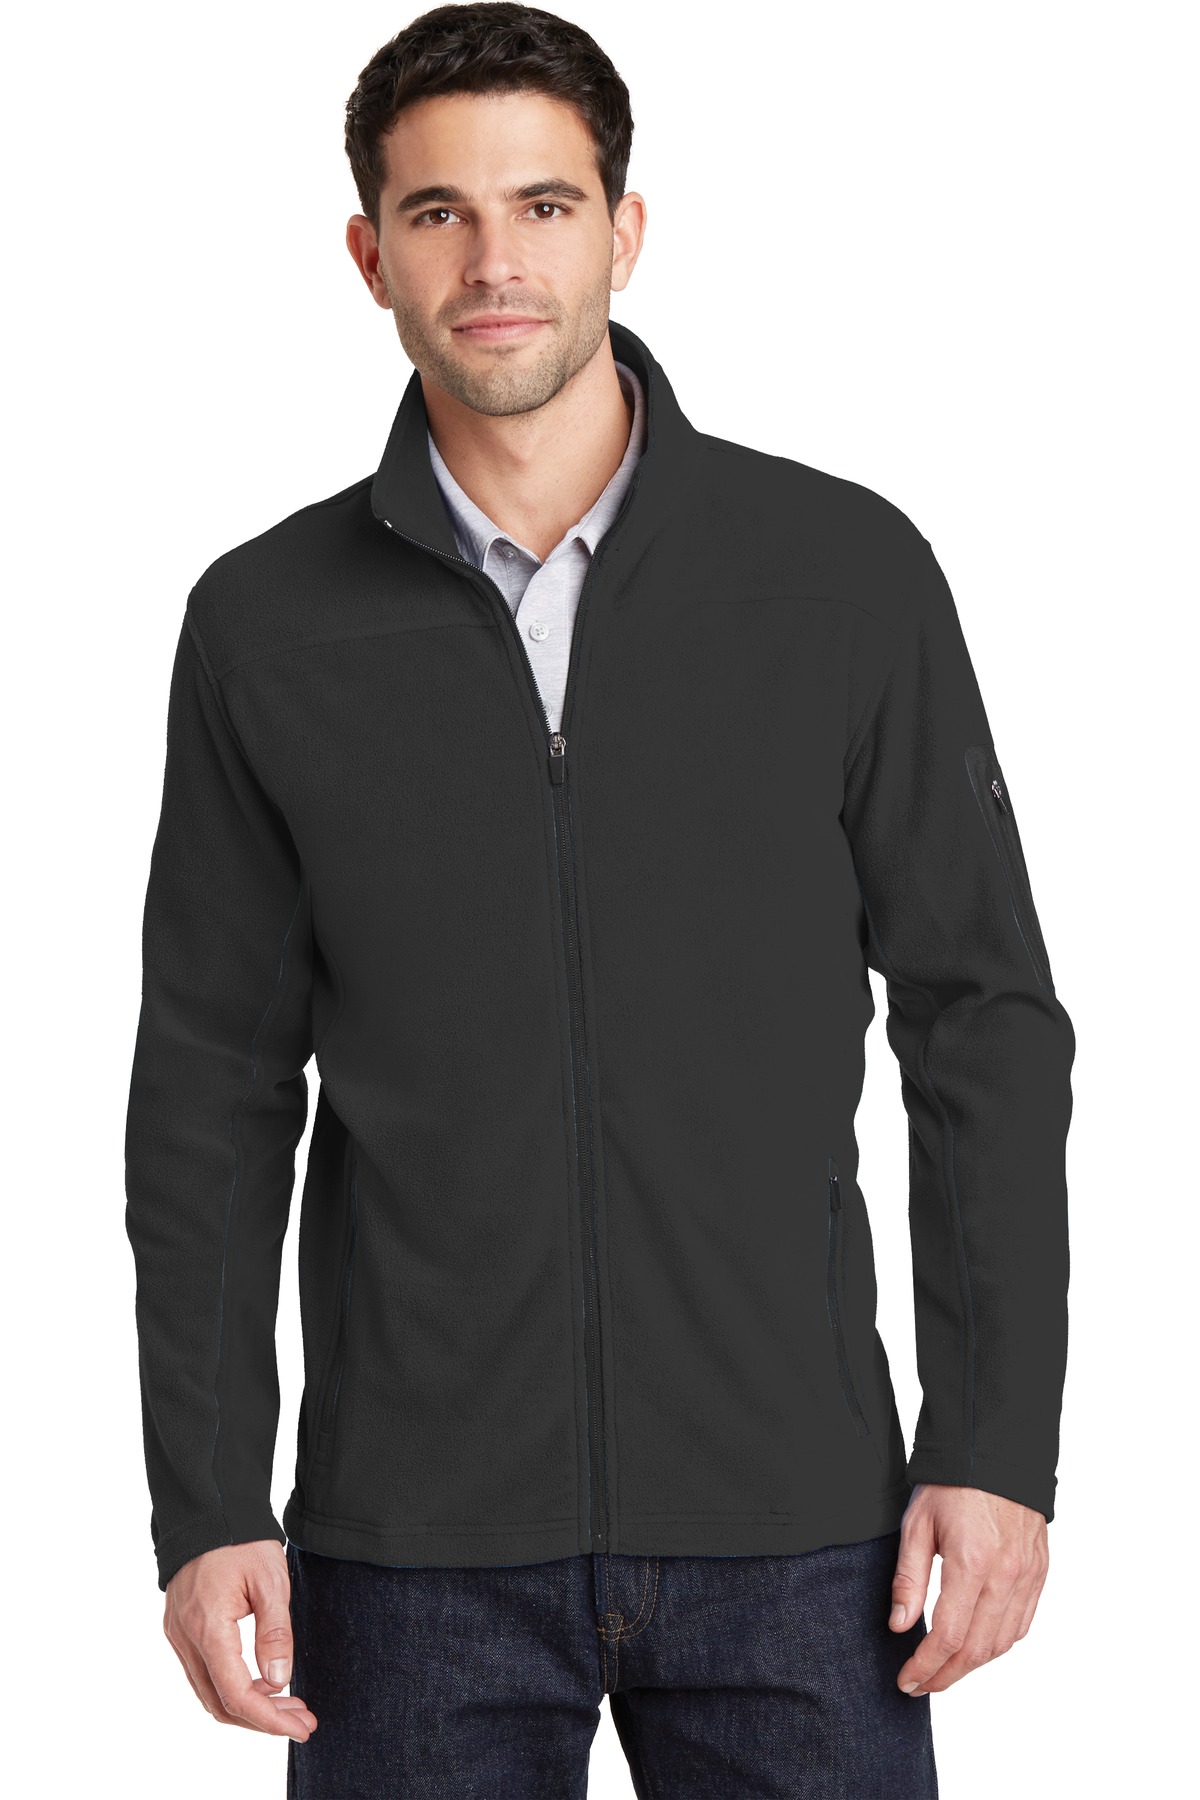 Port Authority Outerwear, Sweat shirts & Fleece for Hospitality ® Summit Fleece Full-Zip Jacket.-Port Authority